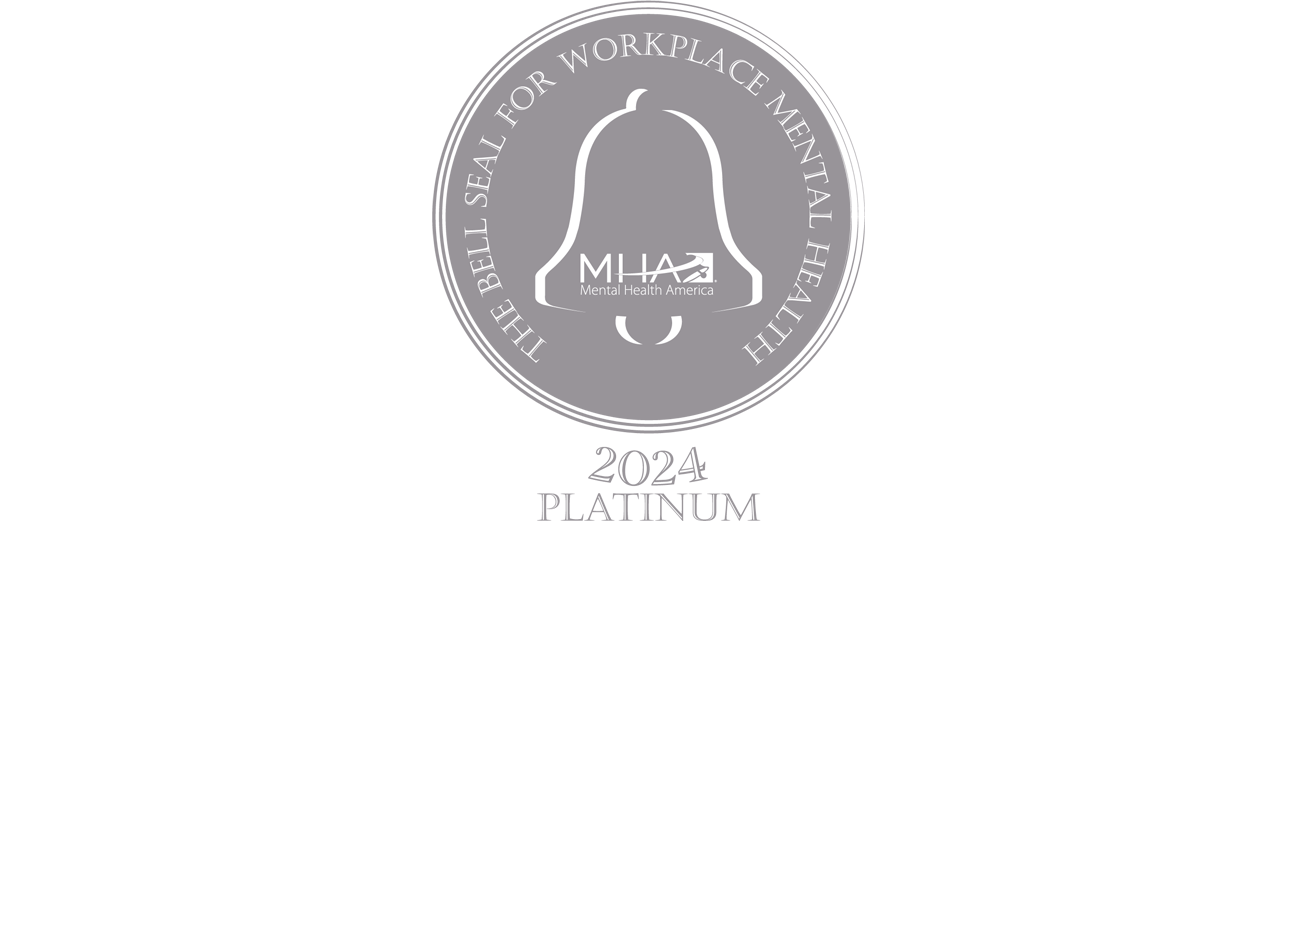 Bell Seal Logo_Platinum 2024